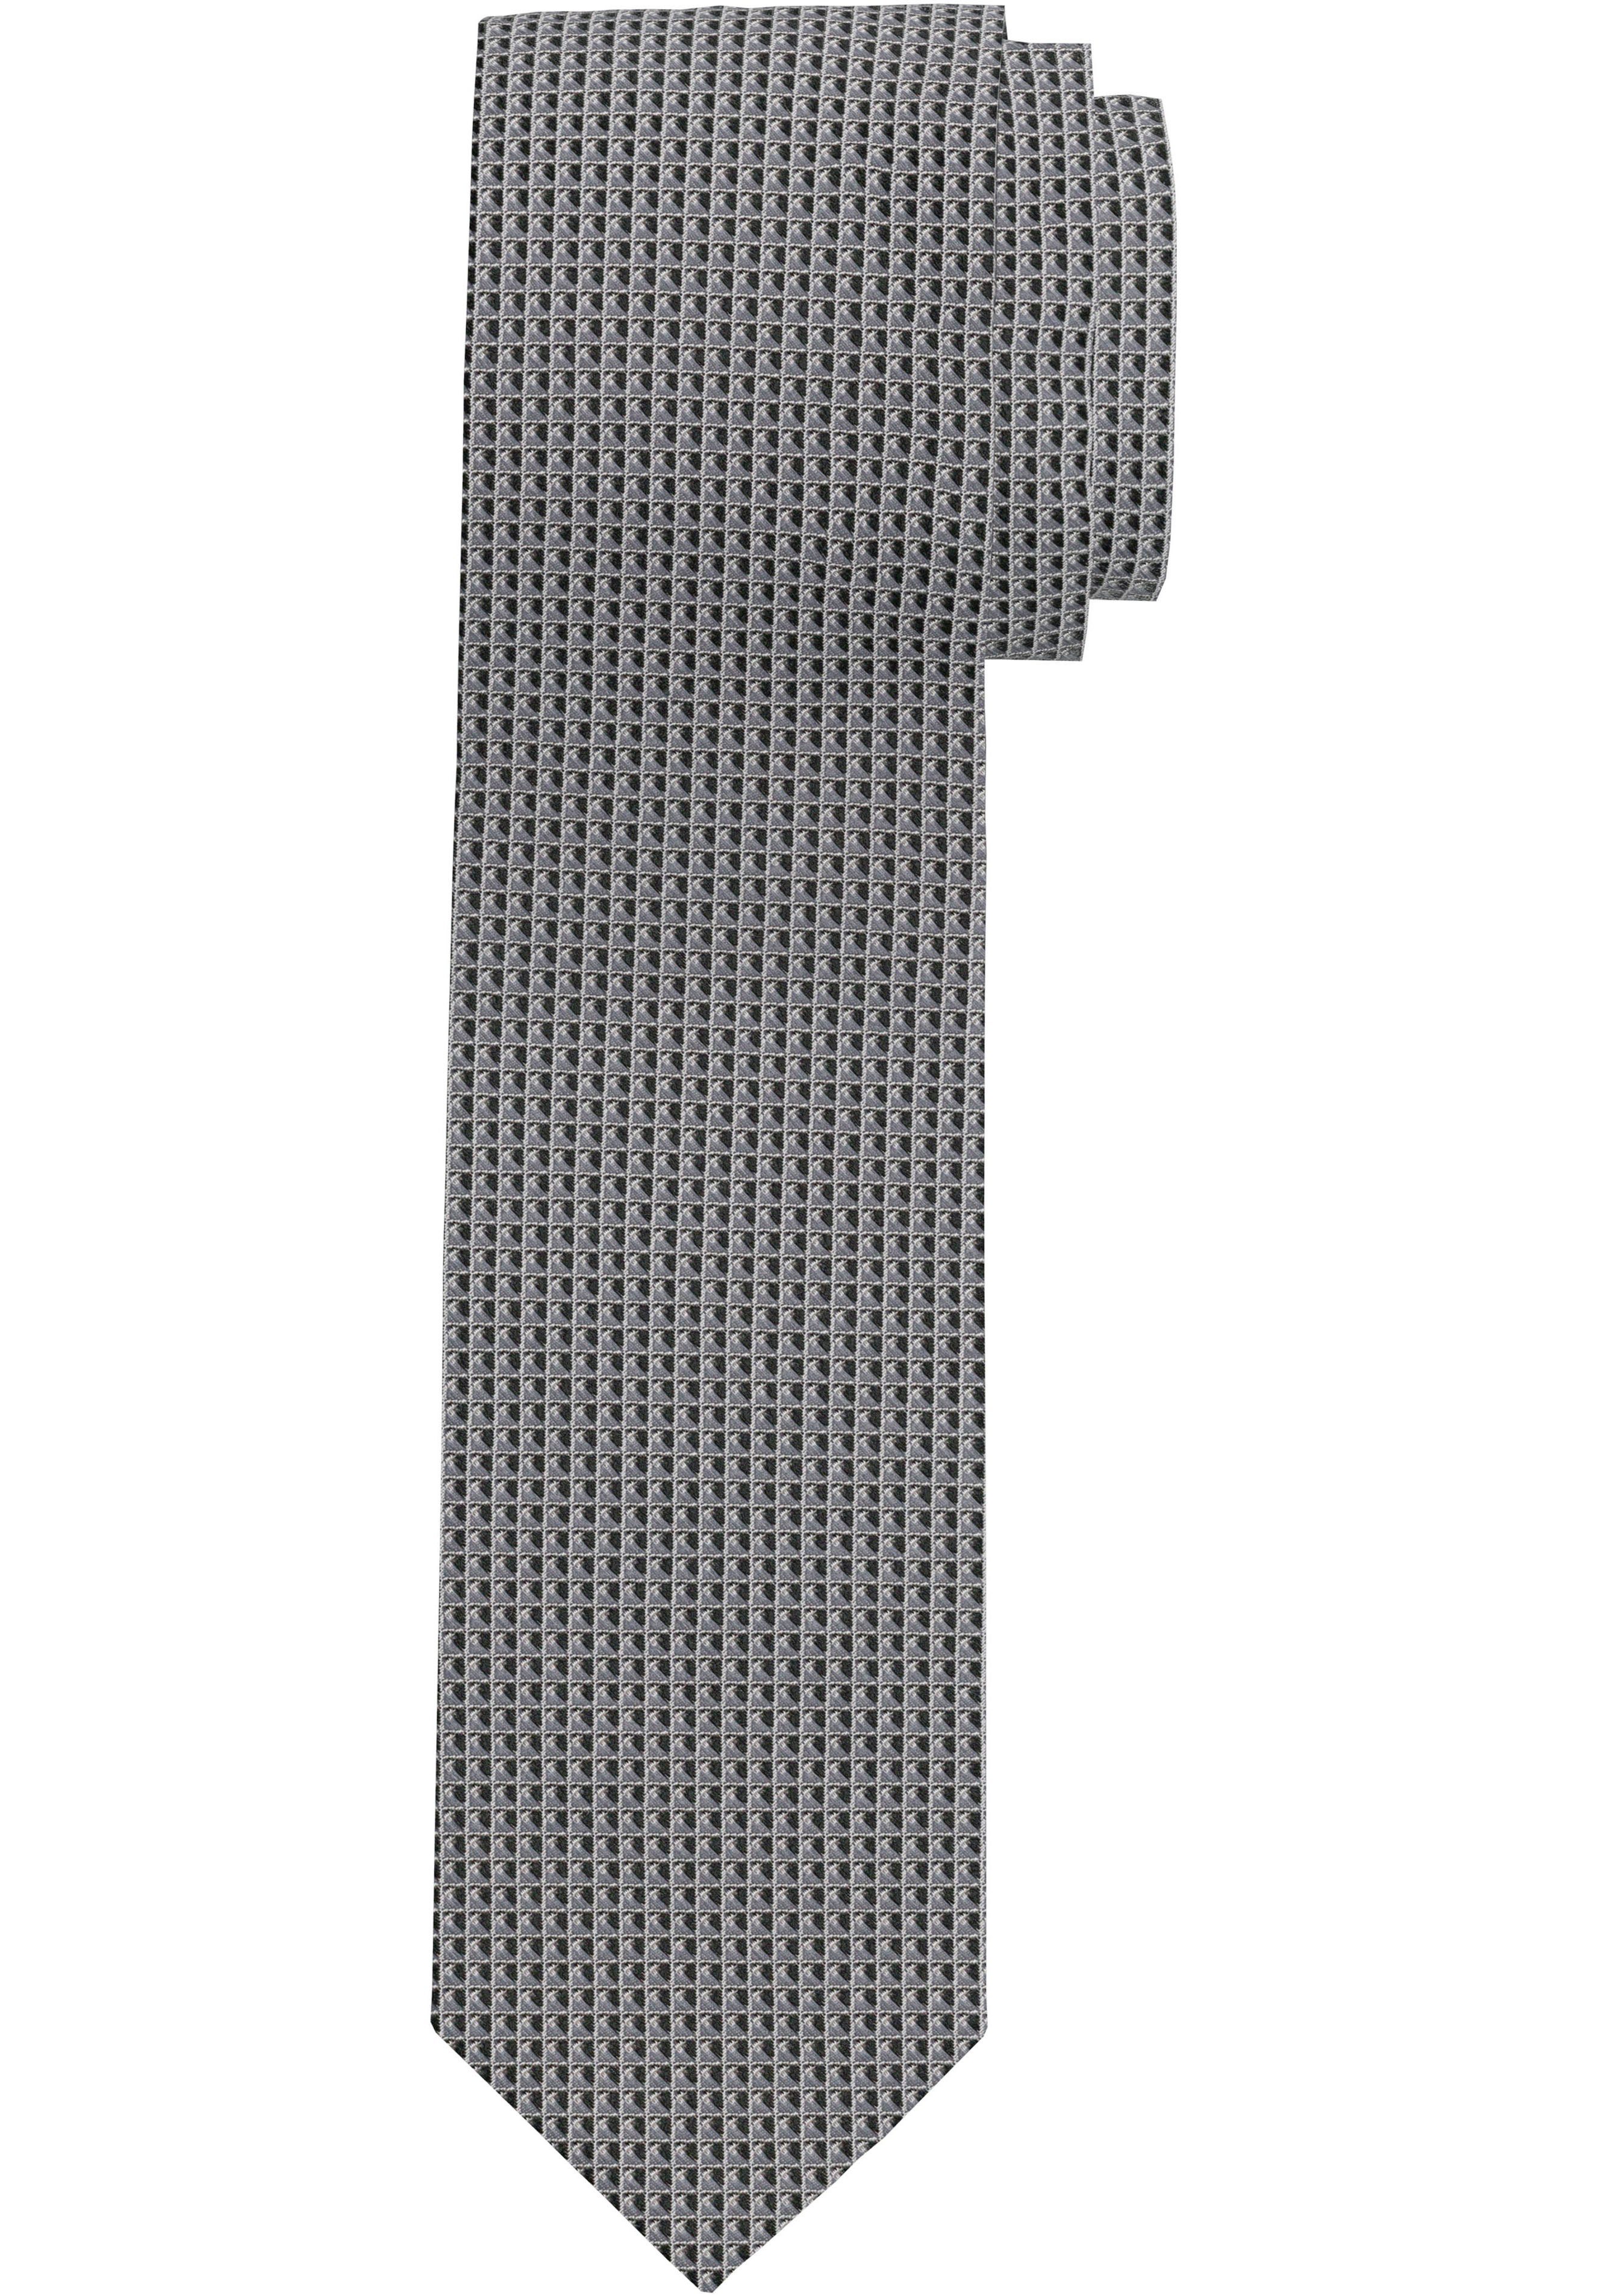 OLYMP Krawatte Strukturierte Krawatte anthrazit